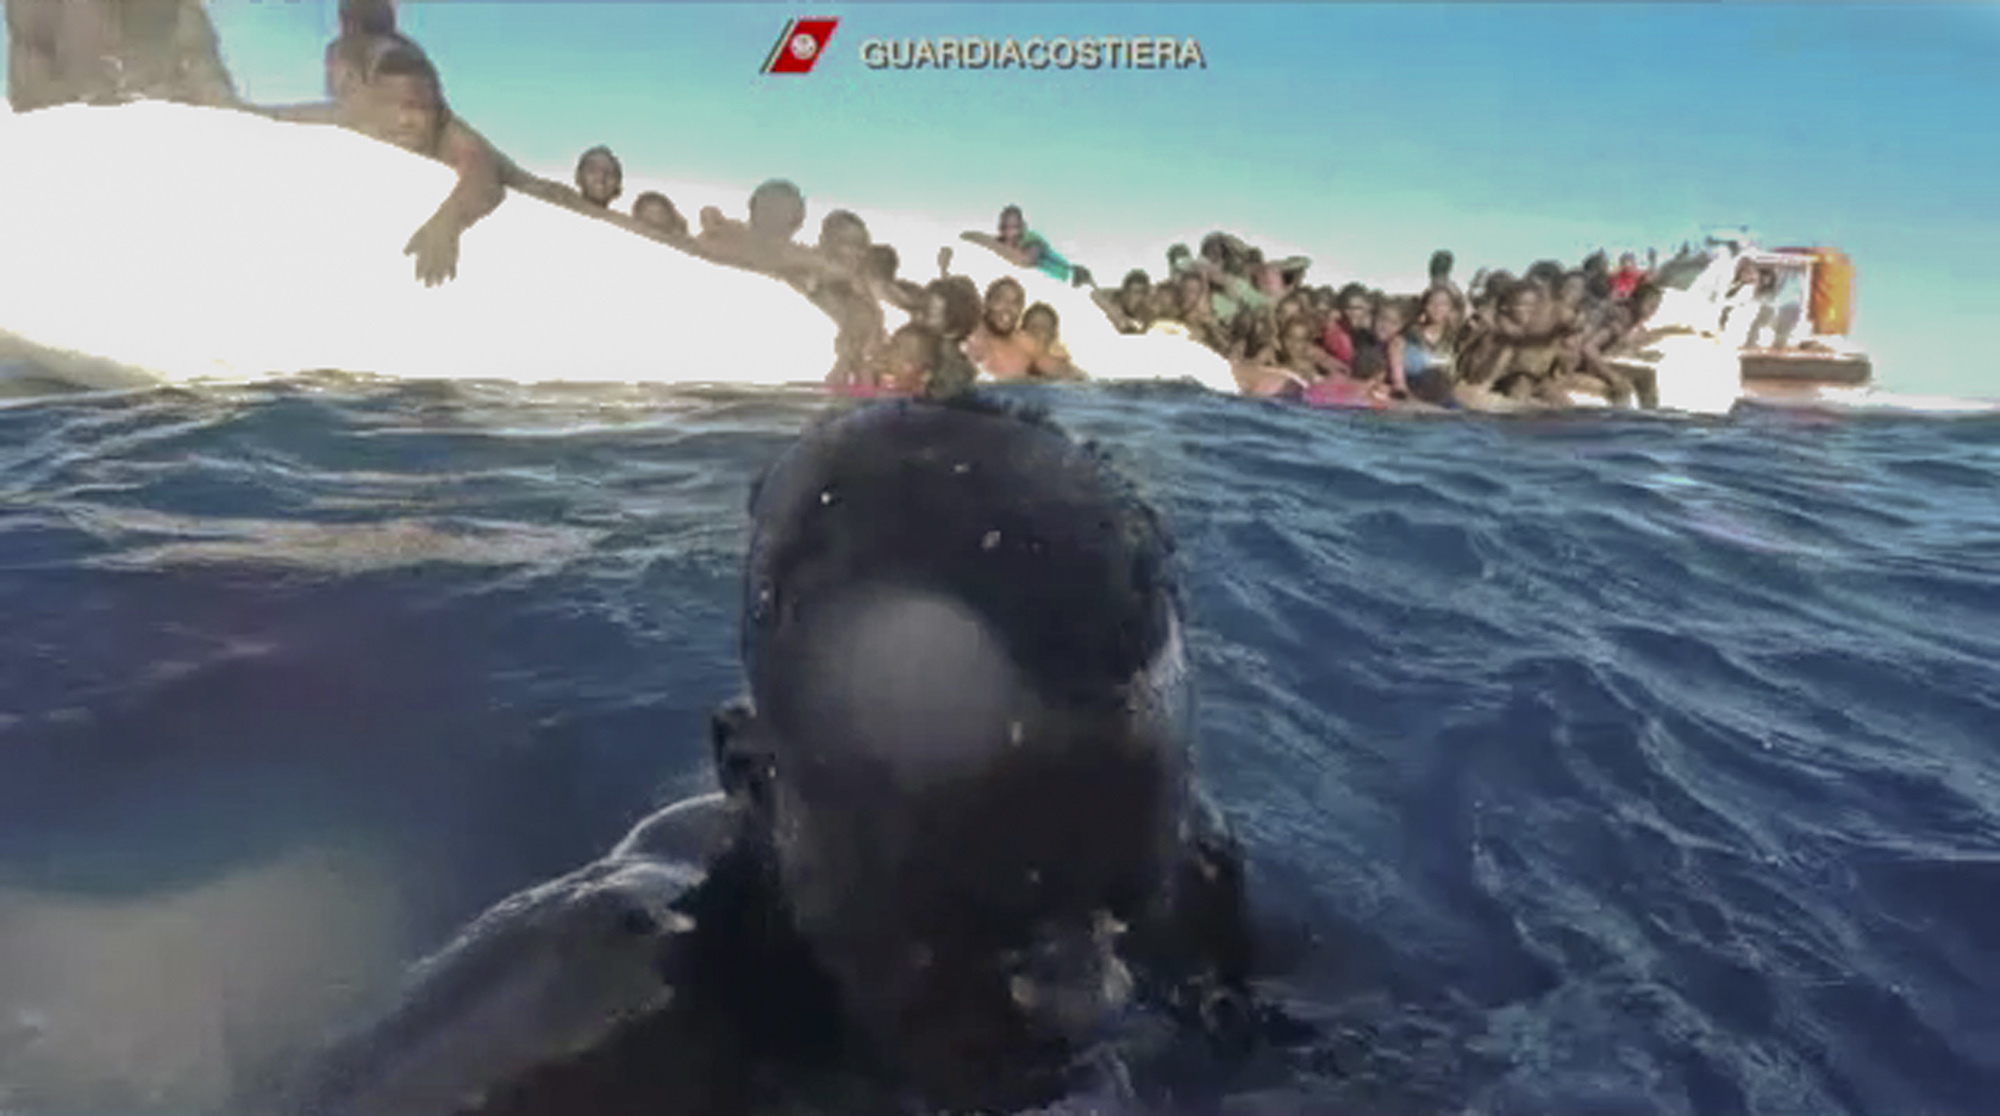 Smuggling boat sinks in Mediterranean, 64 feared dead | The ...